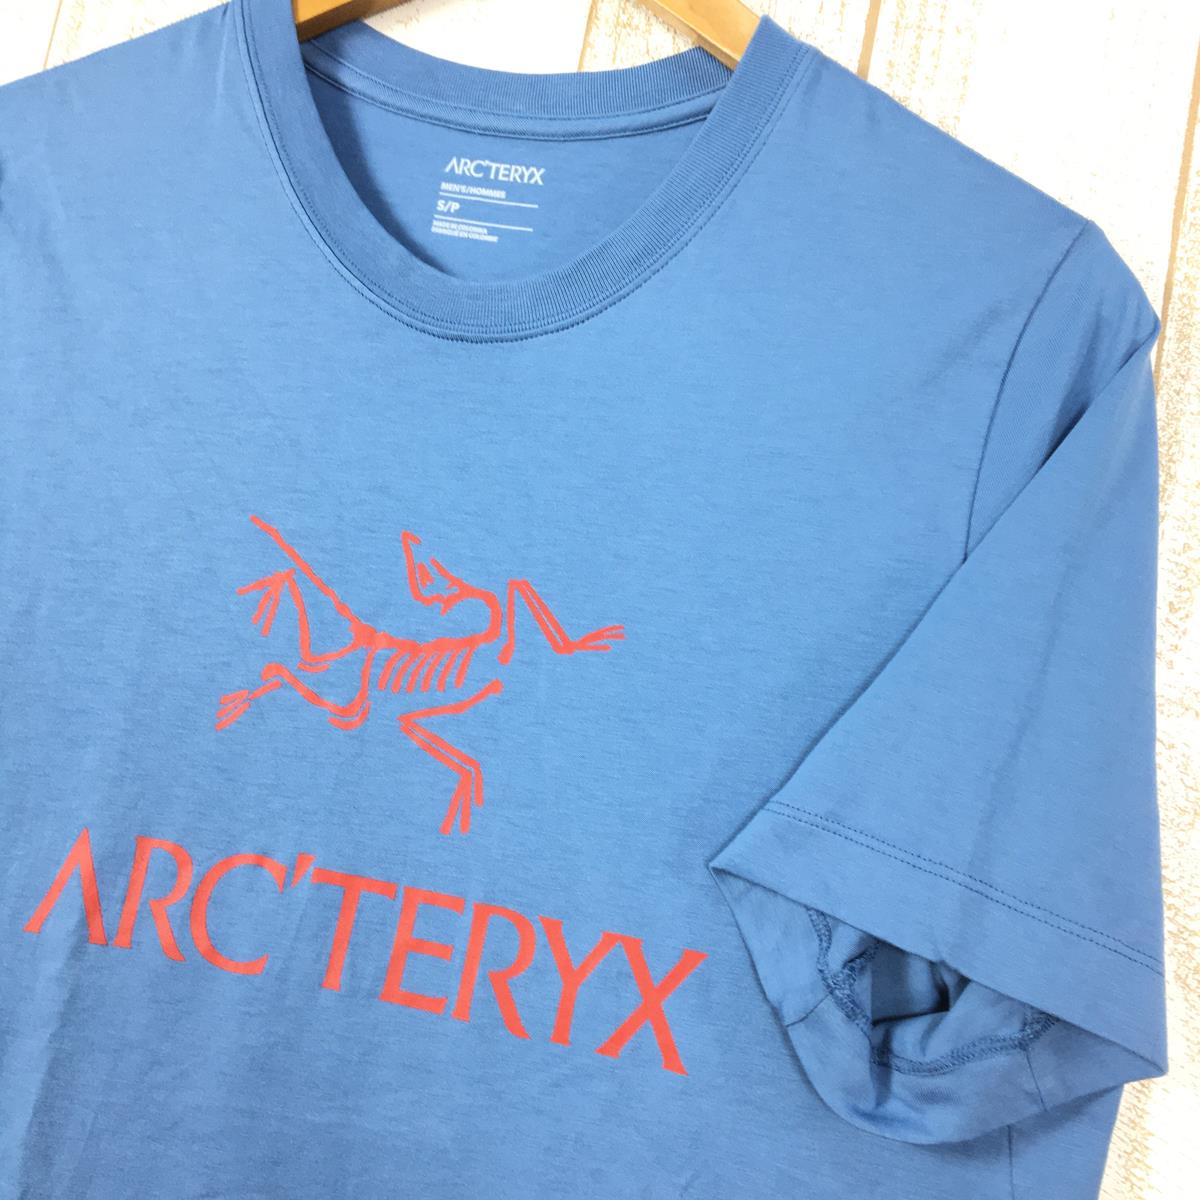 【MEN's S】 アークテリクス アークワード ロゴ ショートスリーブ Arc'Word Logo SS Tシャツ ARCTERYX X000007991 020815 Stone Wash ブルー系